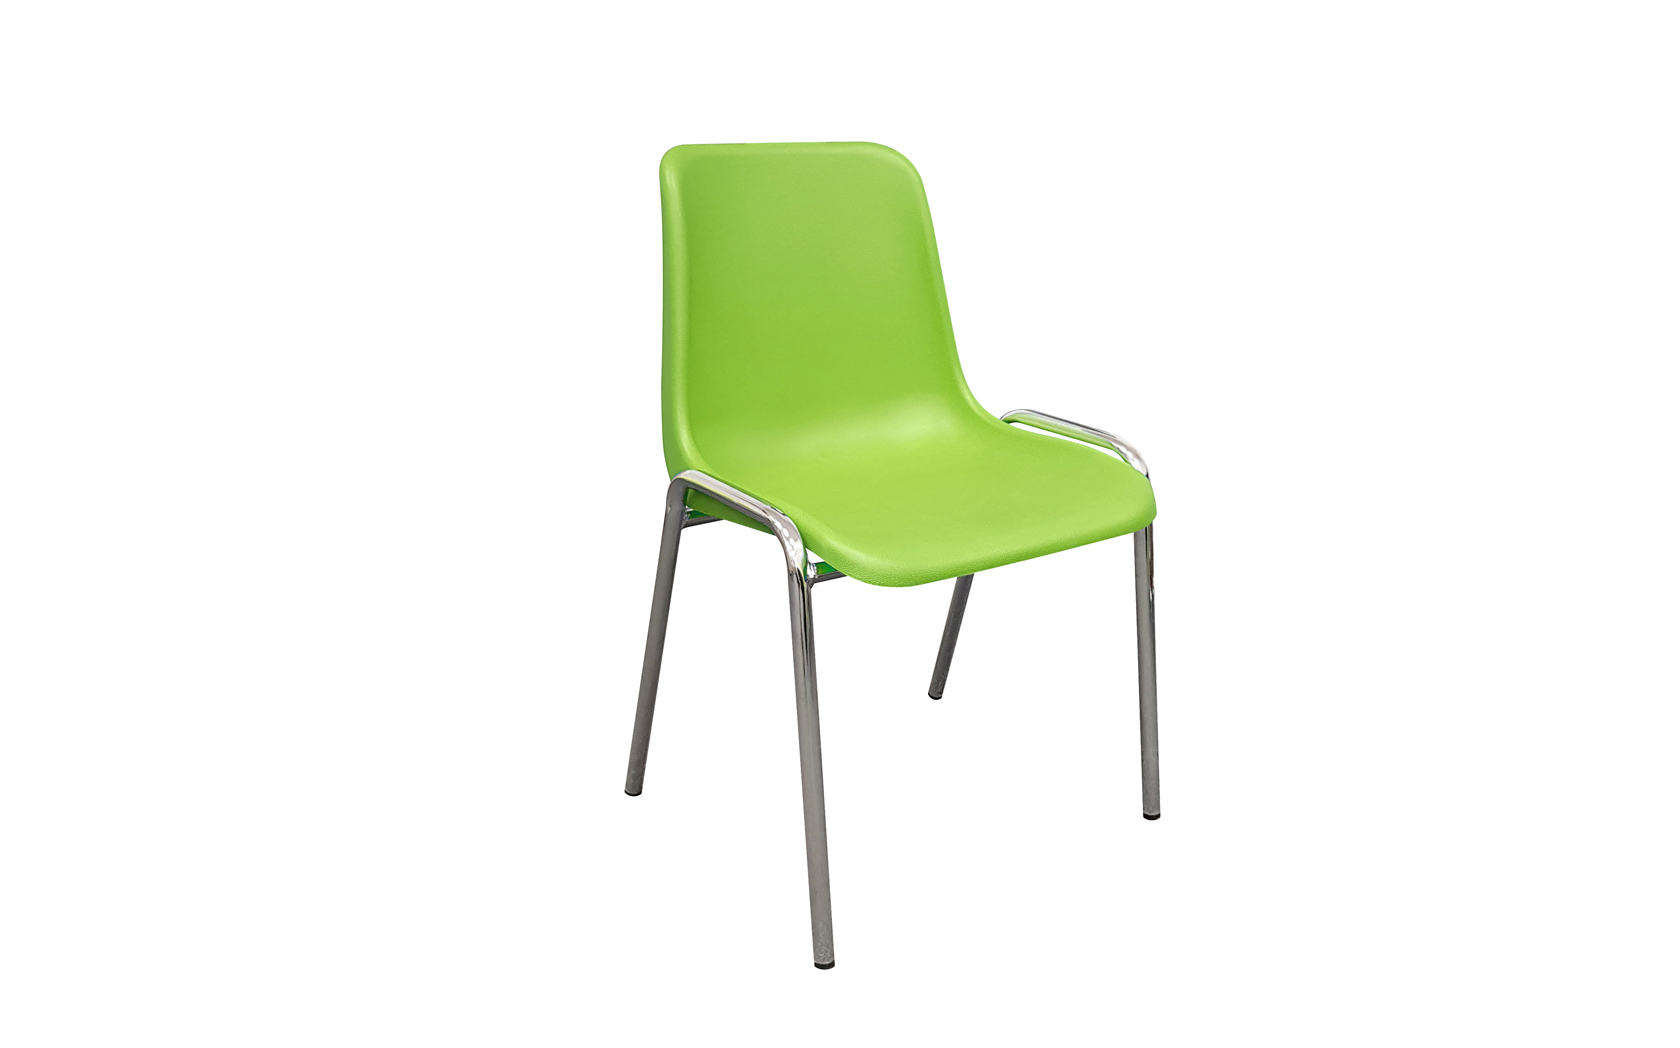 Endurance multi purpose stacking chair plastic shell chrome legs Lime Green